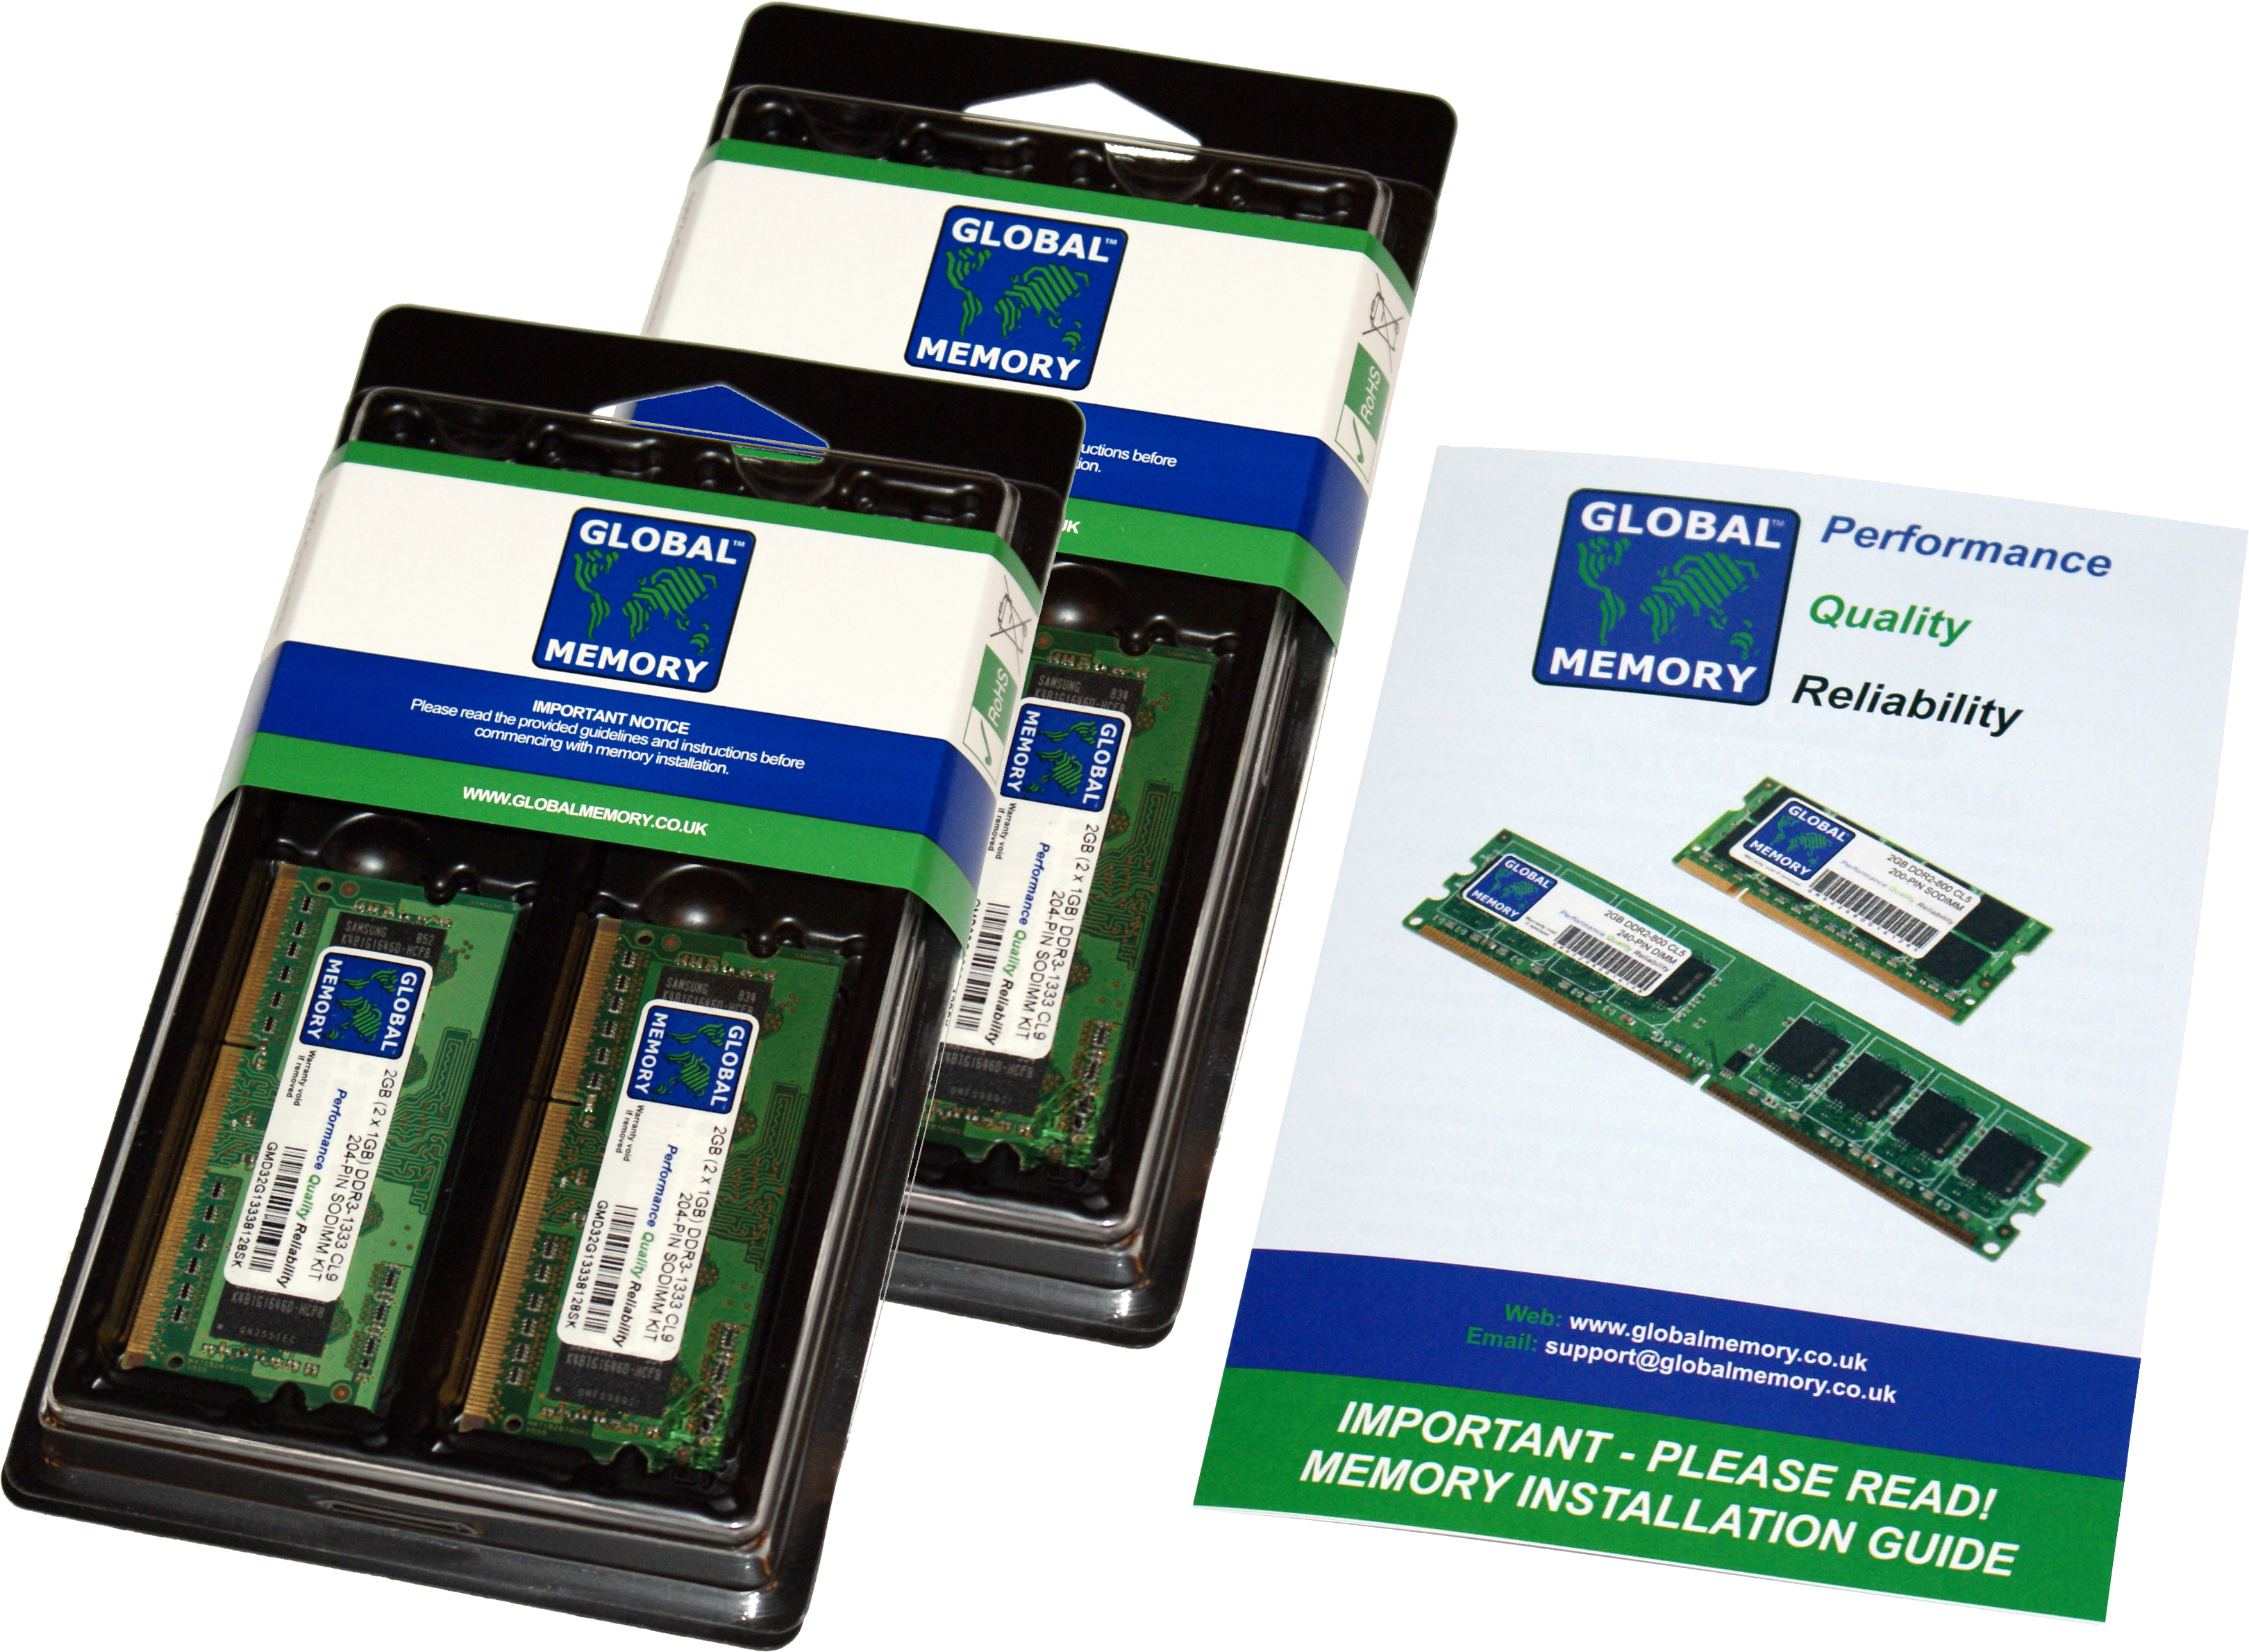 16GB (4 x 4GB) DDR4 2133MHz PC4-17000 260-PIN SODIMM MEMORY RAM KIT FOR ADVENT LAPTOPS/NOTEBOOKS